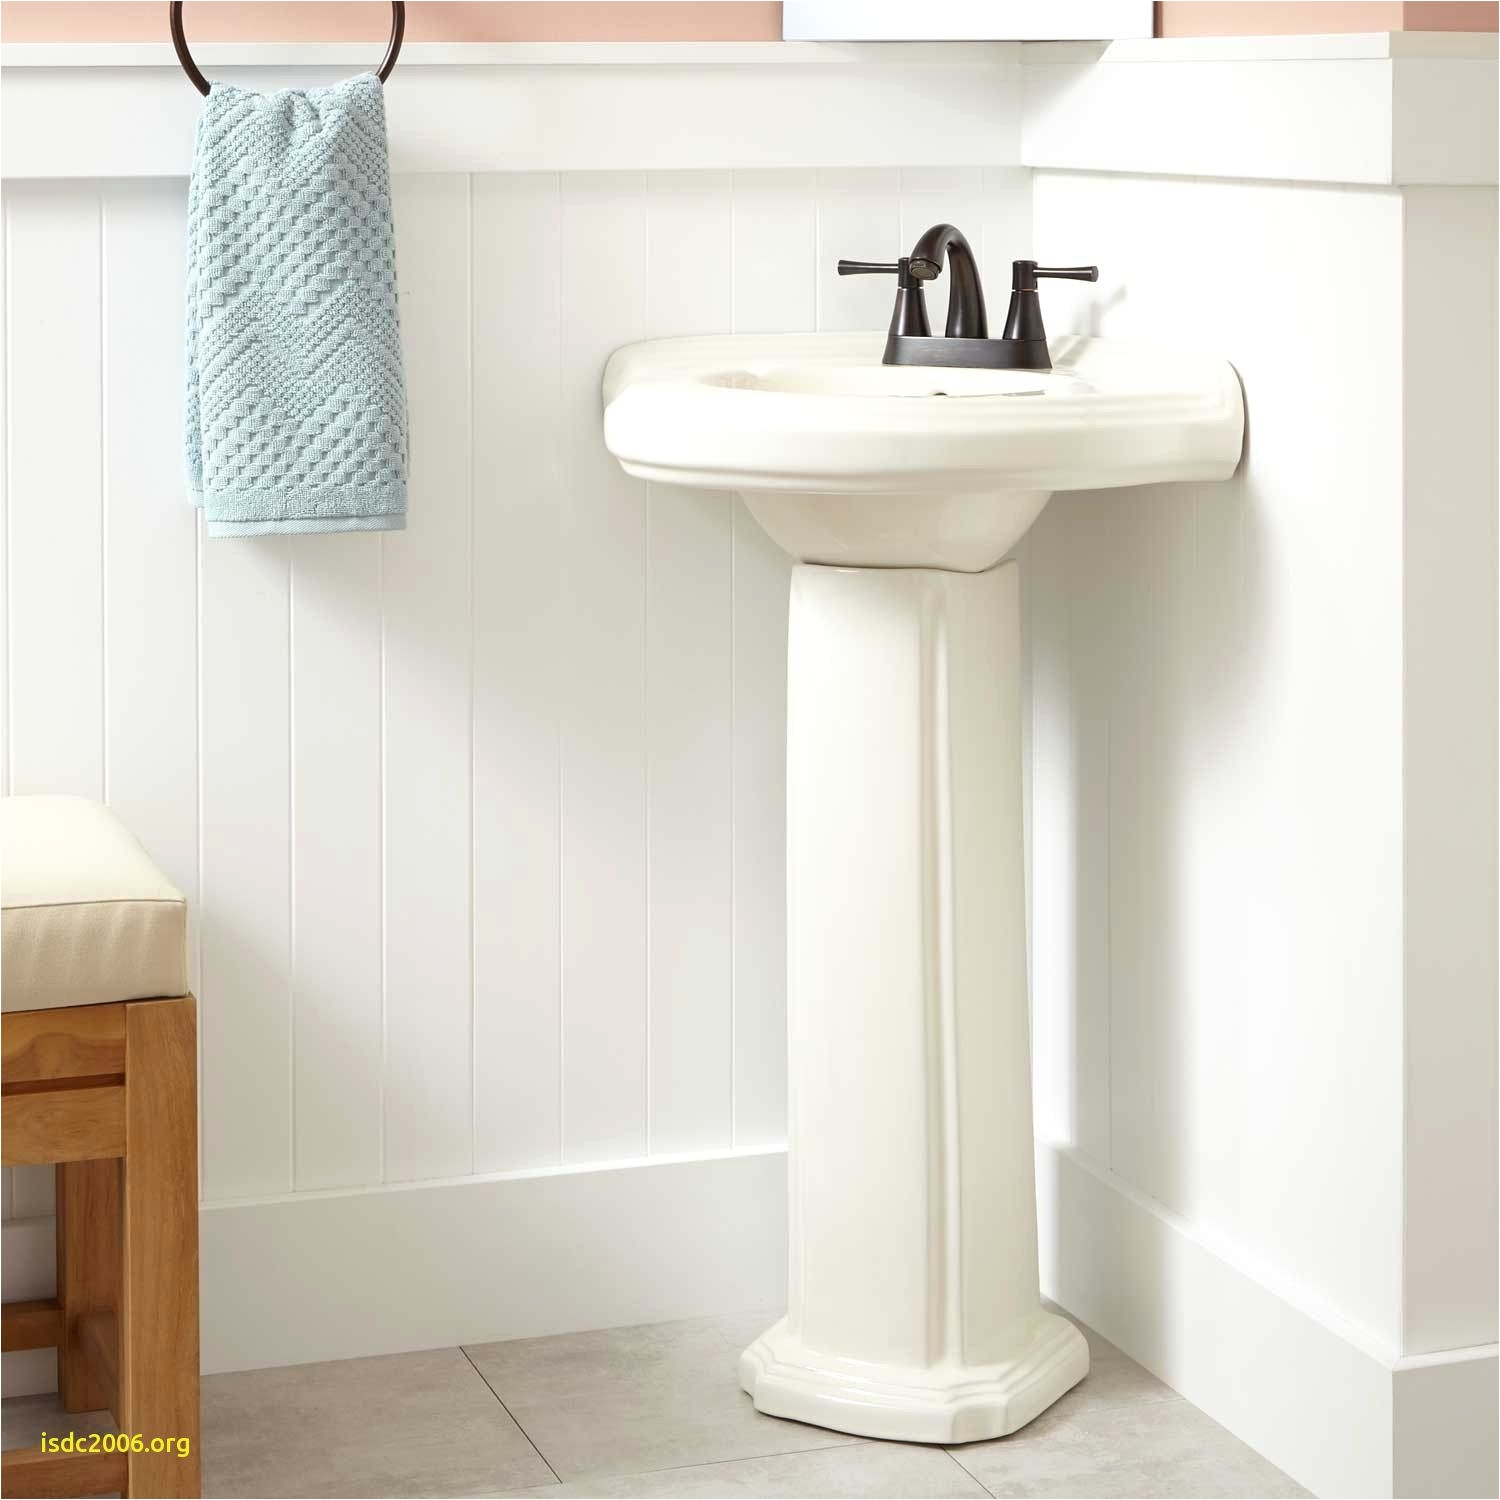 Lovely Fresh Design Small Bathroom Pedestal Sink Cleverh Sinks Clever I 0d